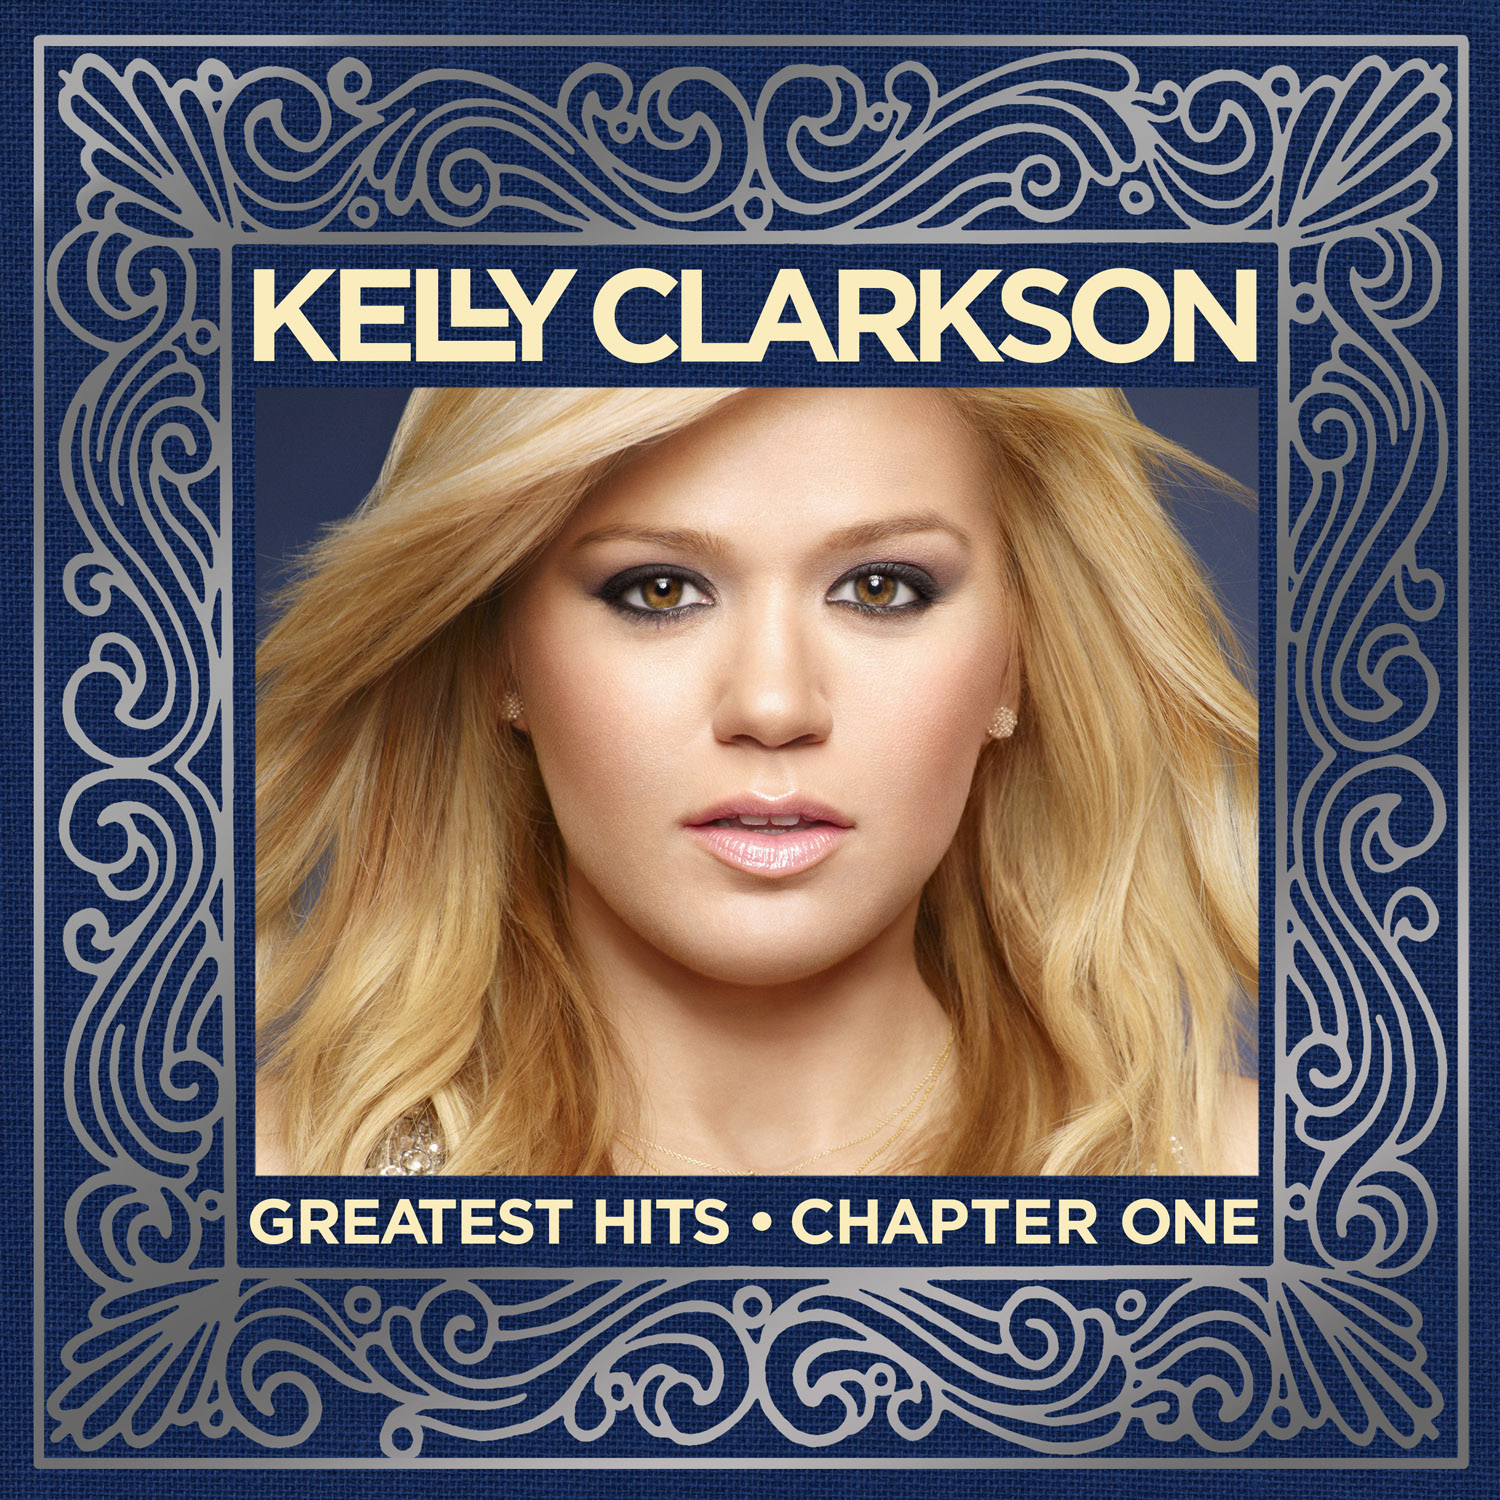 http://4.bp.blogspot.com/-kxKELHYbdpM/UIQHjP4bd1I/AAAAAAAAGks/ivNXbhTJagc/s1600/Kelly-Clarkson-Greatest-Hits-Chapter-One-2012-Final-1500x1500.jpg